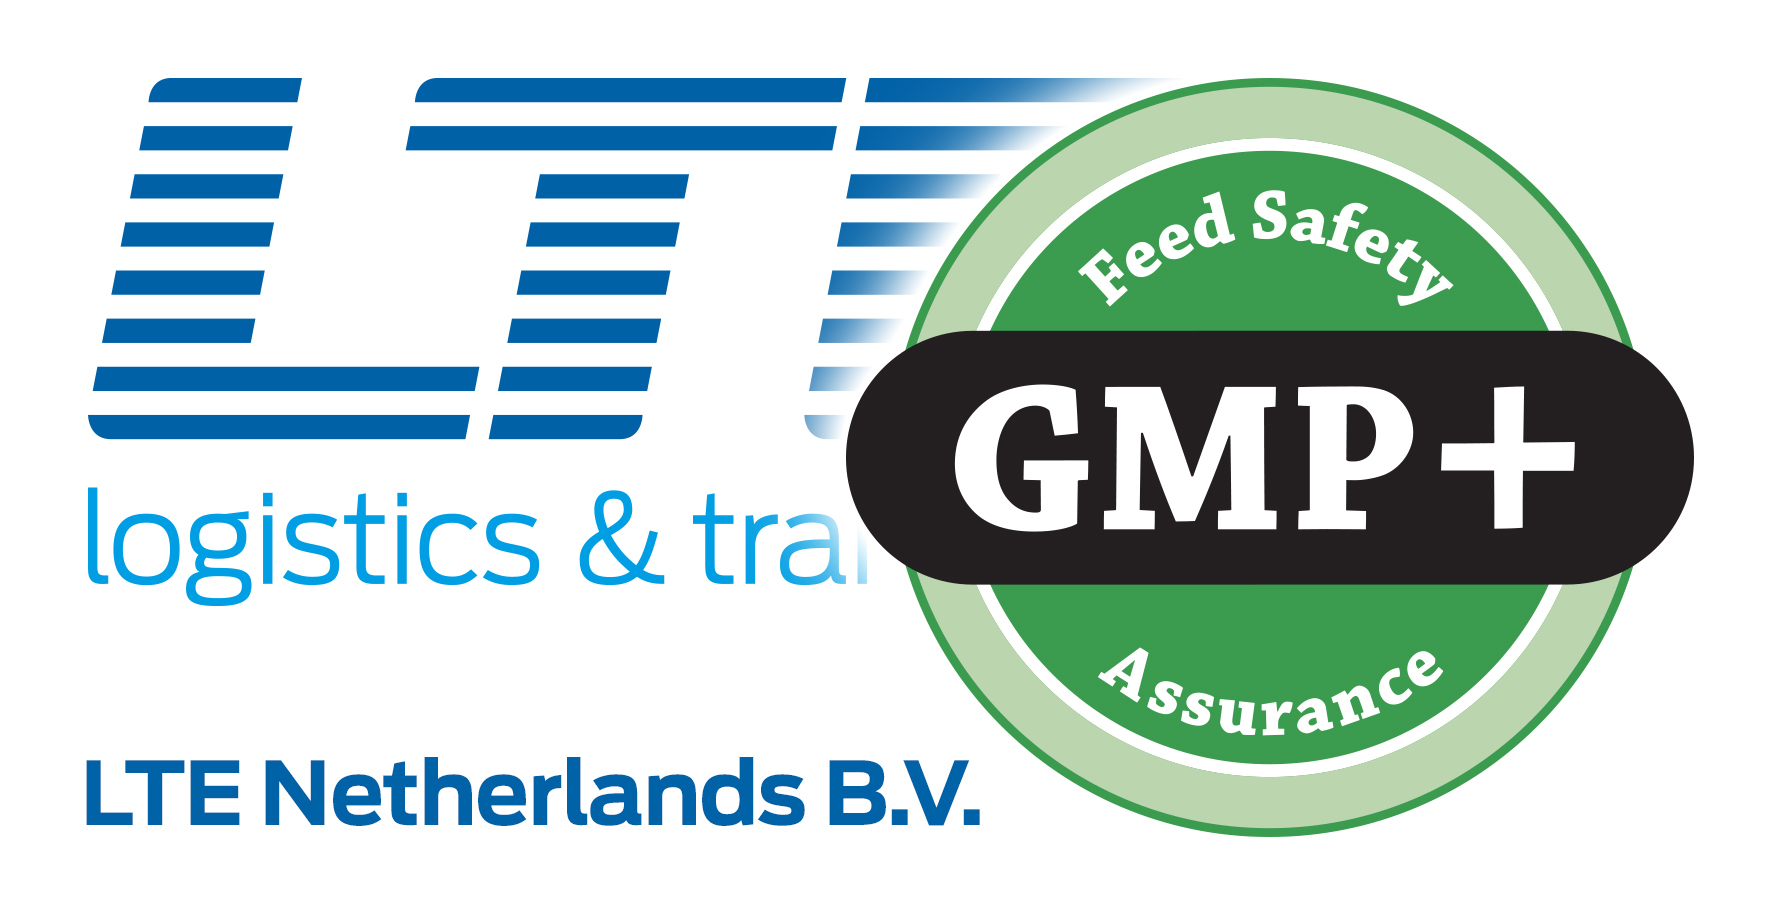 LTE NL | Qualitätsvoller - GMP+ zertifizierte Transporte